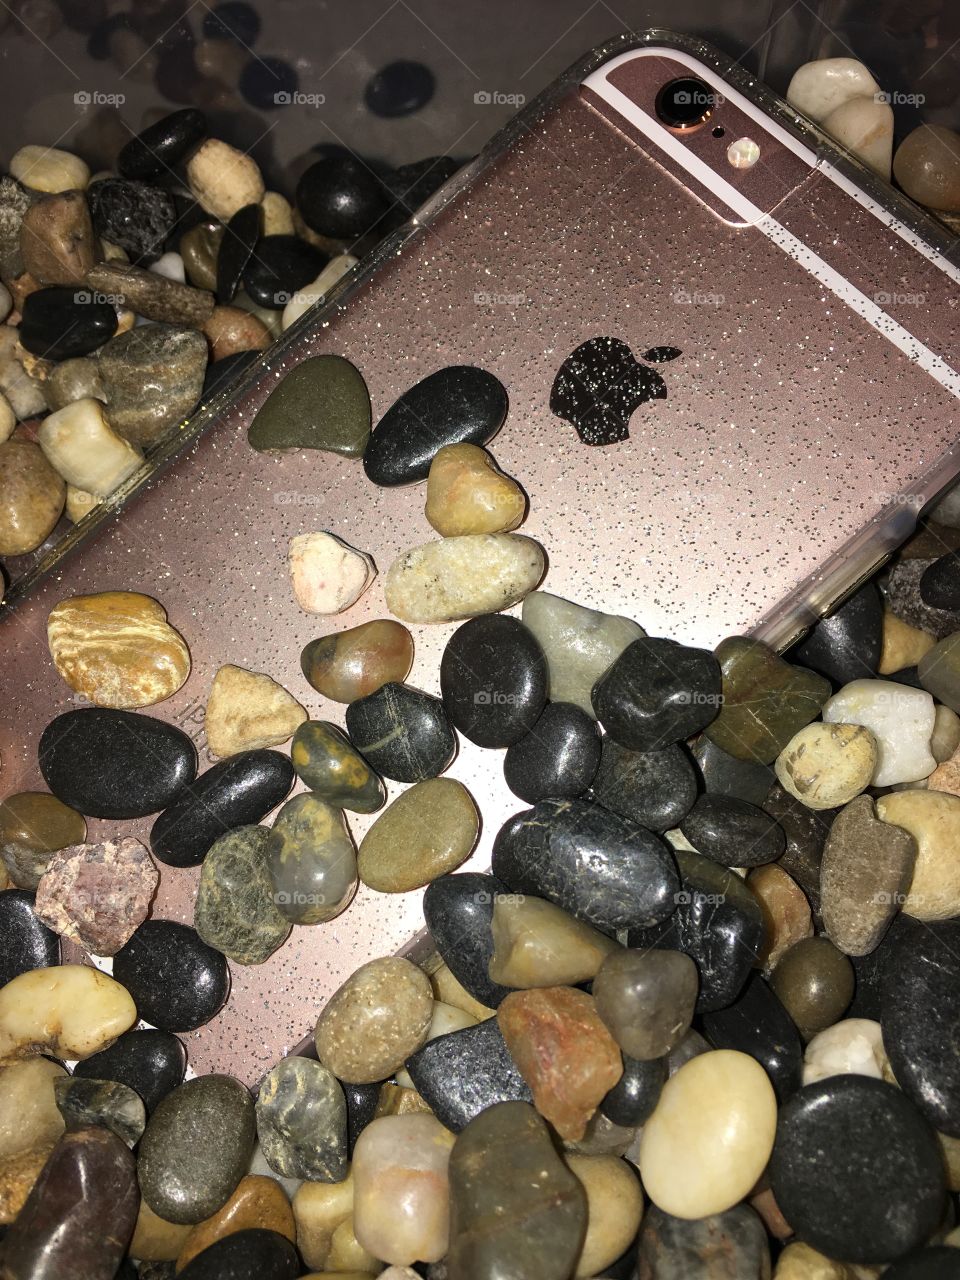 iPhone in rocks